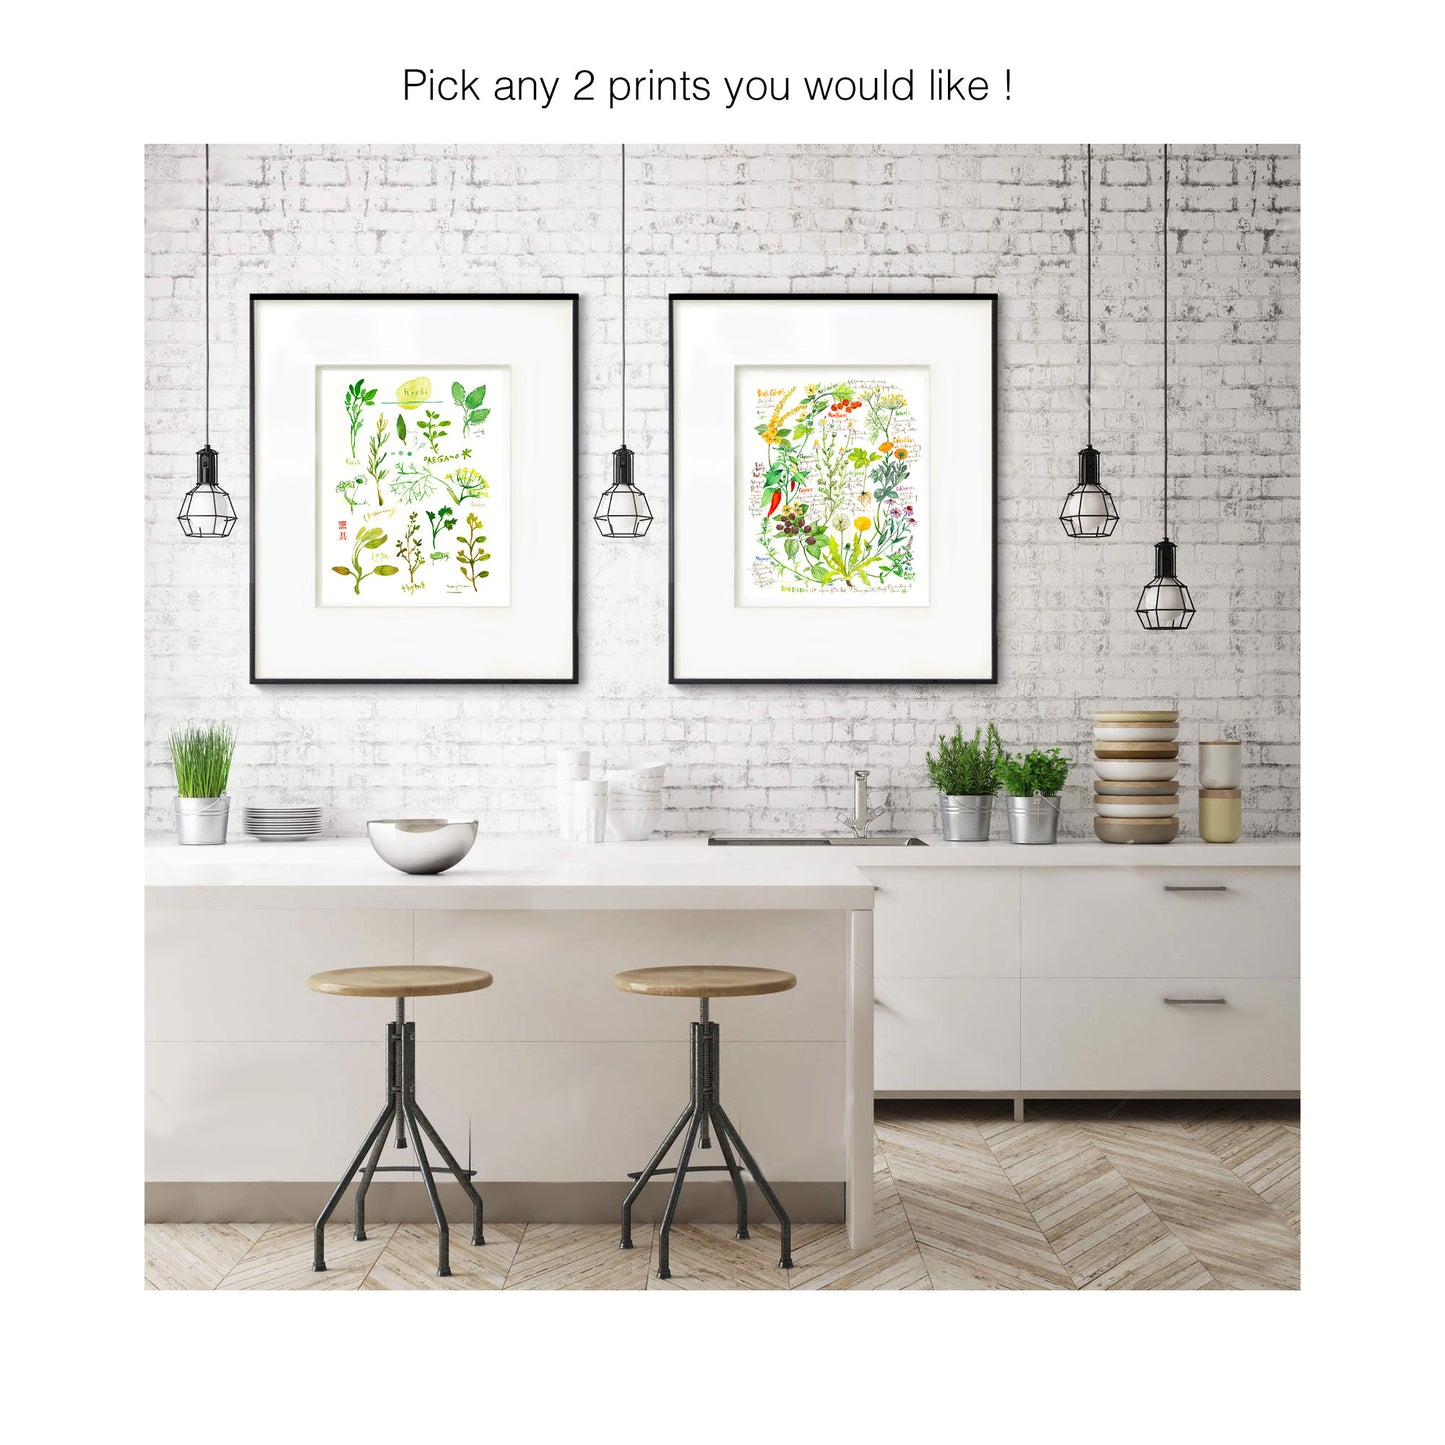 Set of 2 prints. Choose any two prints